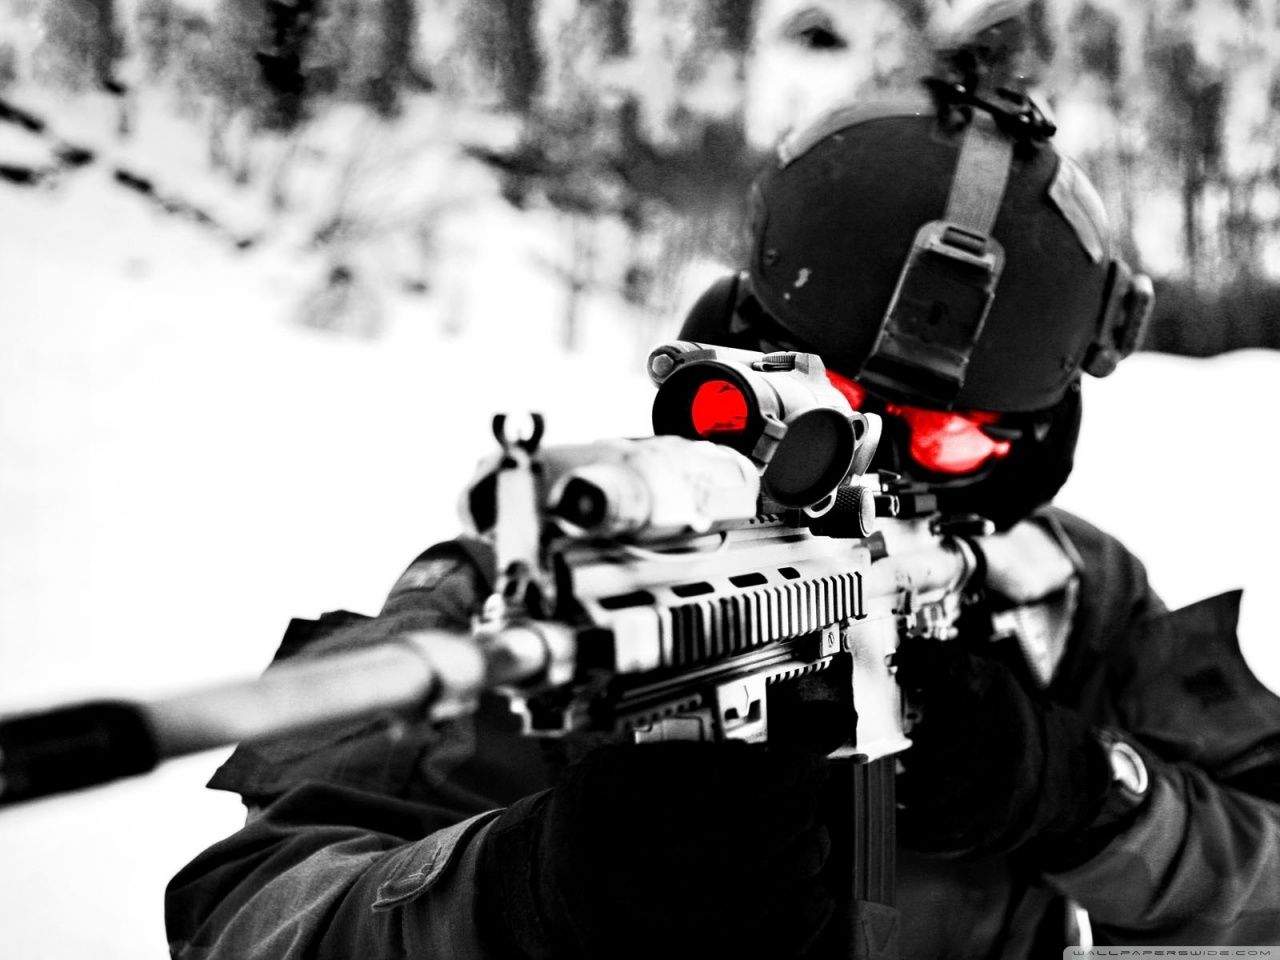 Sniper 4K Ultra HD Dark Wallpaper Free Sniper 4K Ultra HD Dark Background